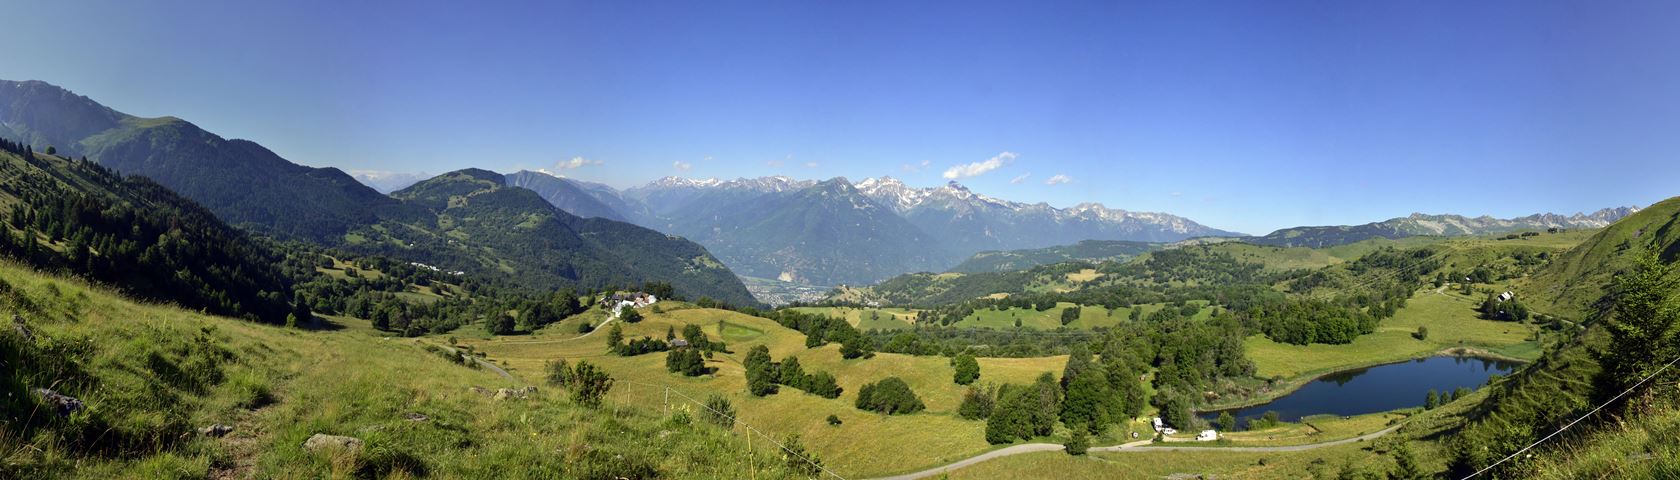 Montaimont. Savoie, France